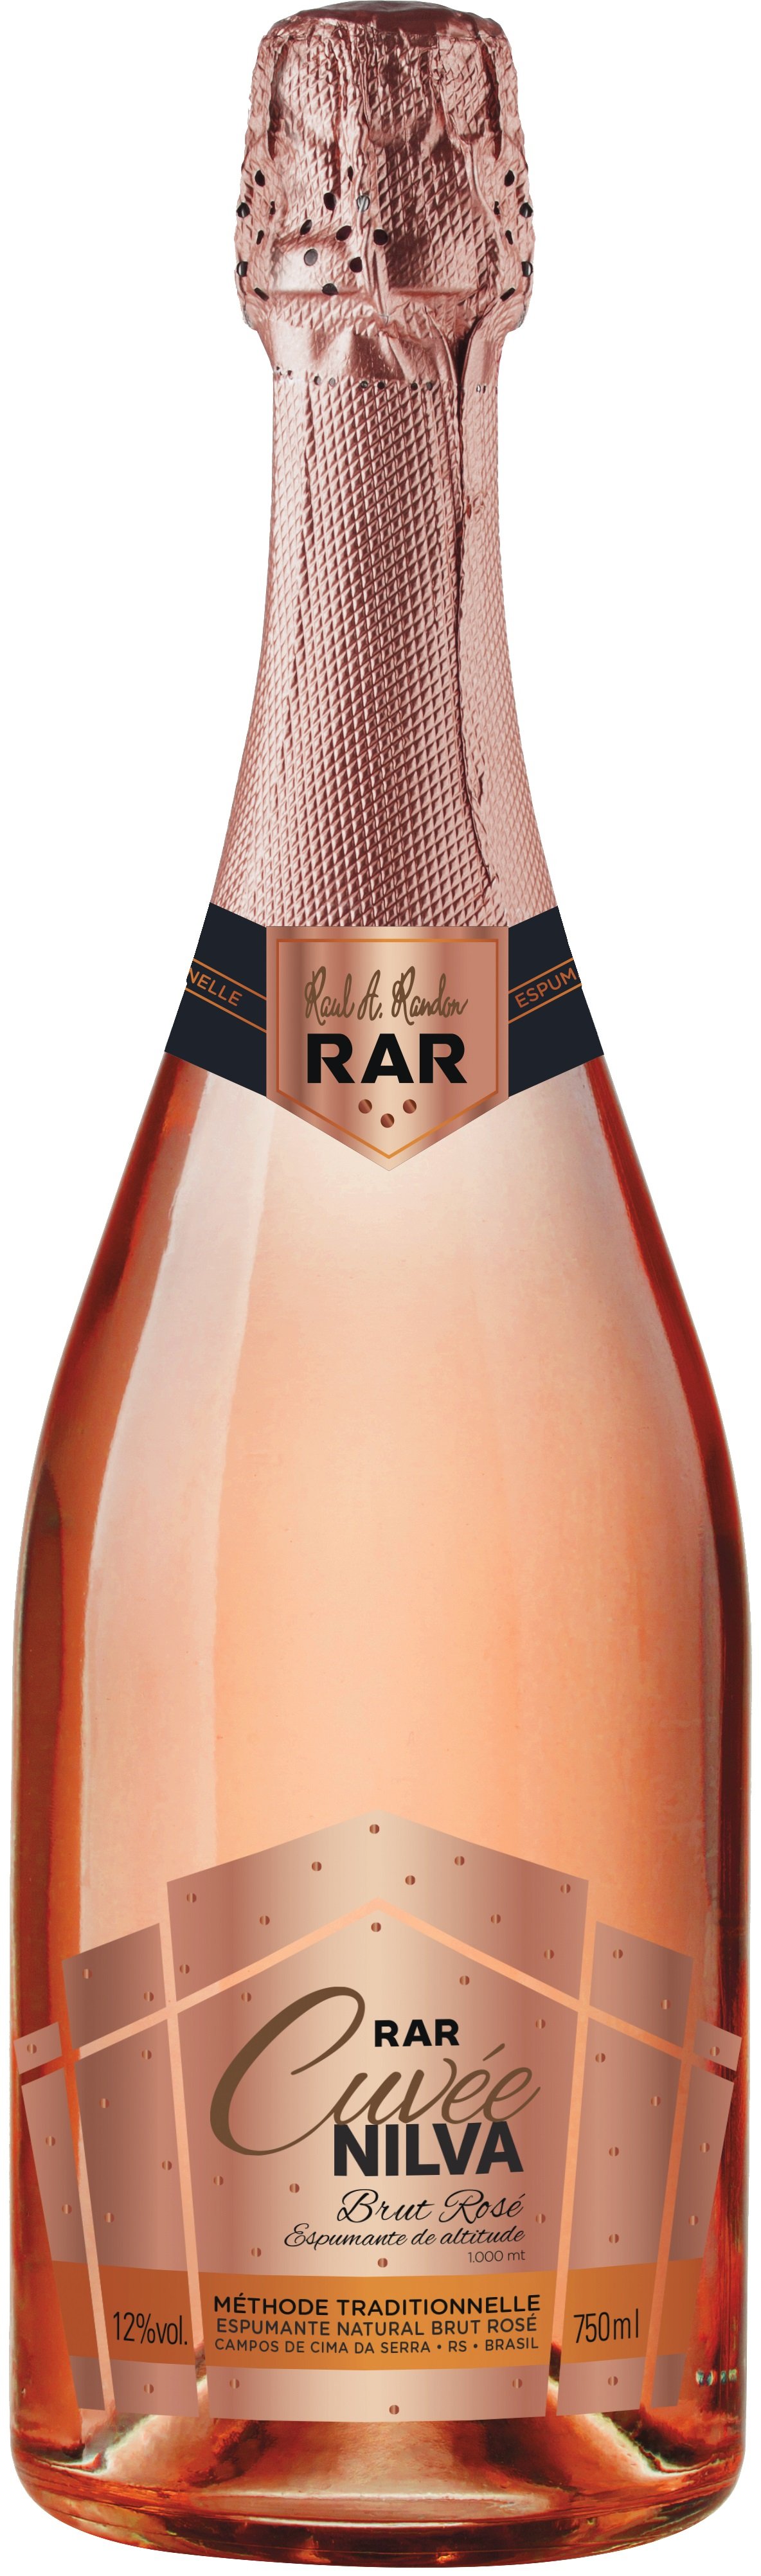 Espumante RaR Cuvée Nilva Brut 750 | Verace Rosé ml Vino